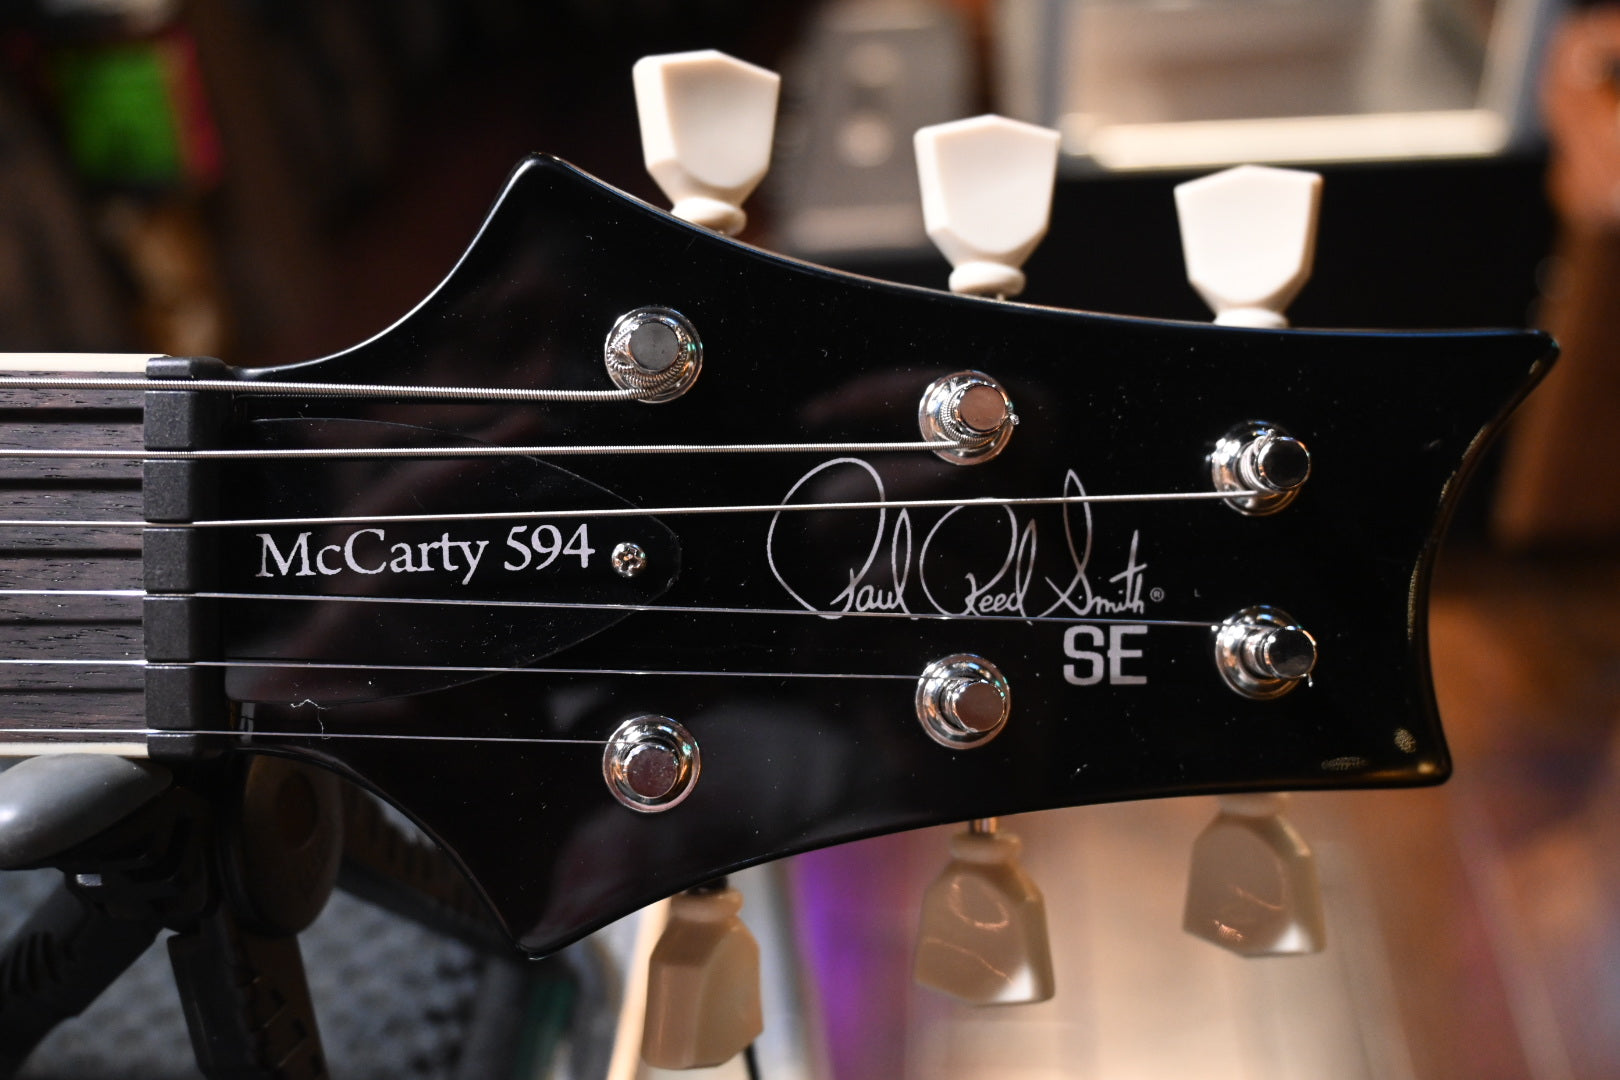 PRS SE McCarty 594 - Black Gold Sunburst Guitar #9056 - Danville Music